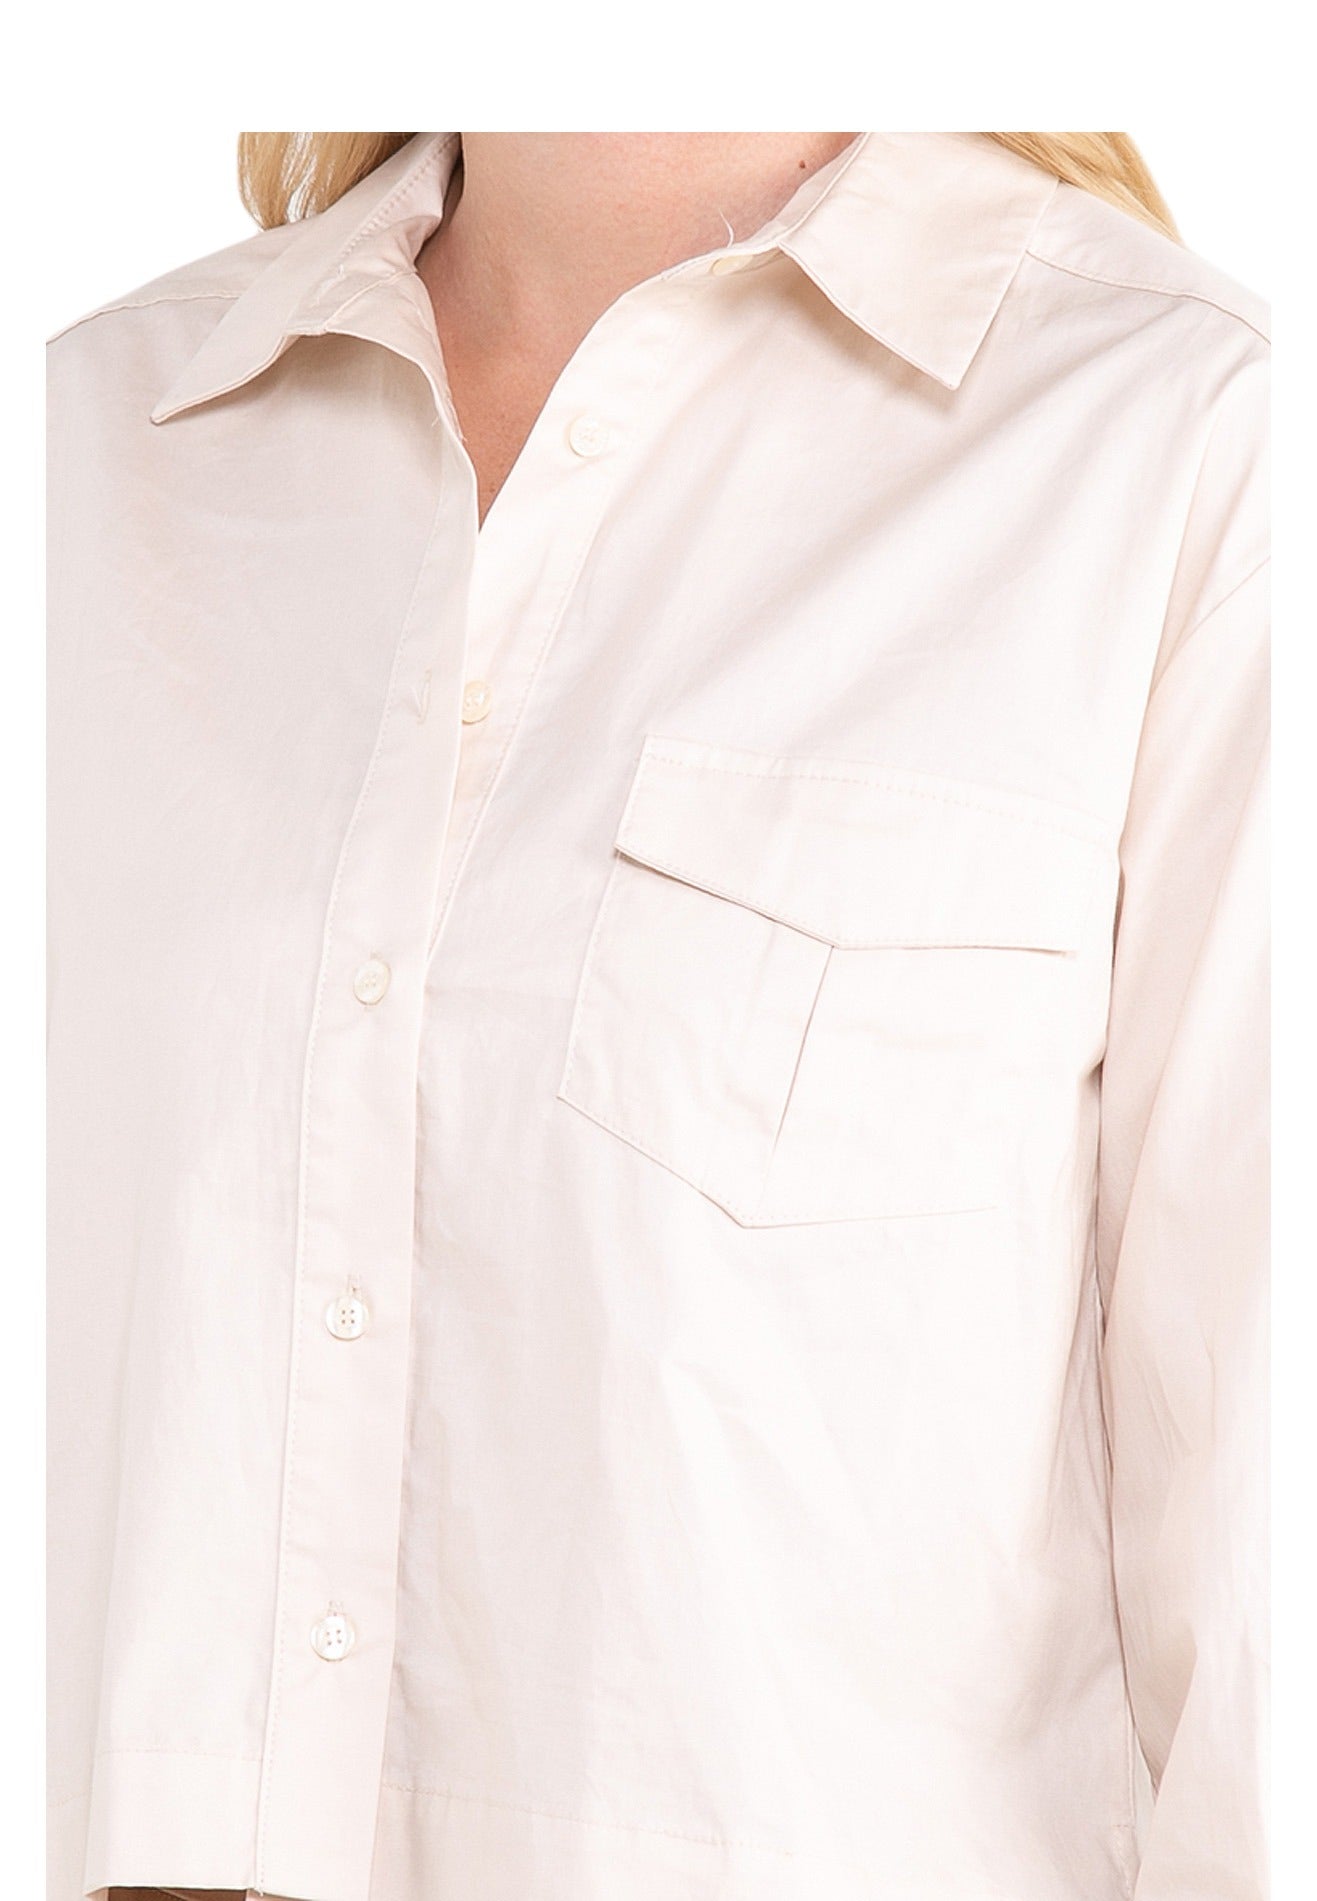 ELLE Apparel Basic Collar Long Sleeves Shirt